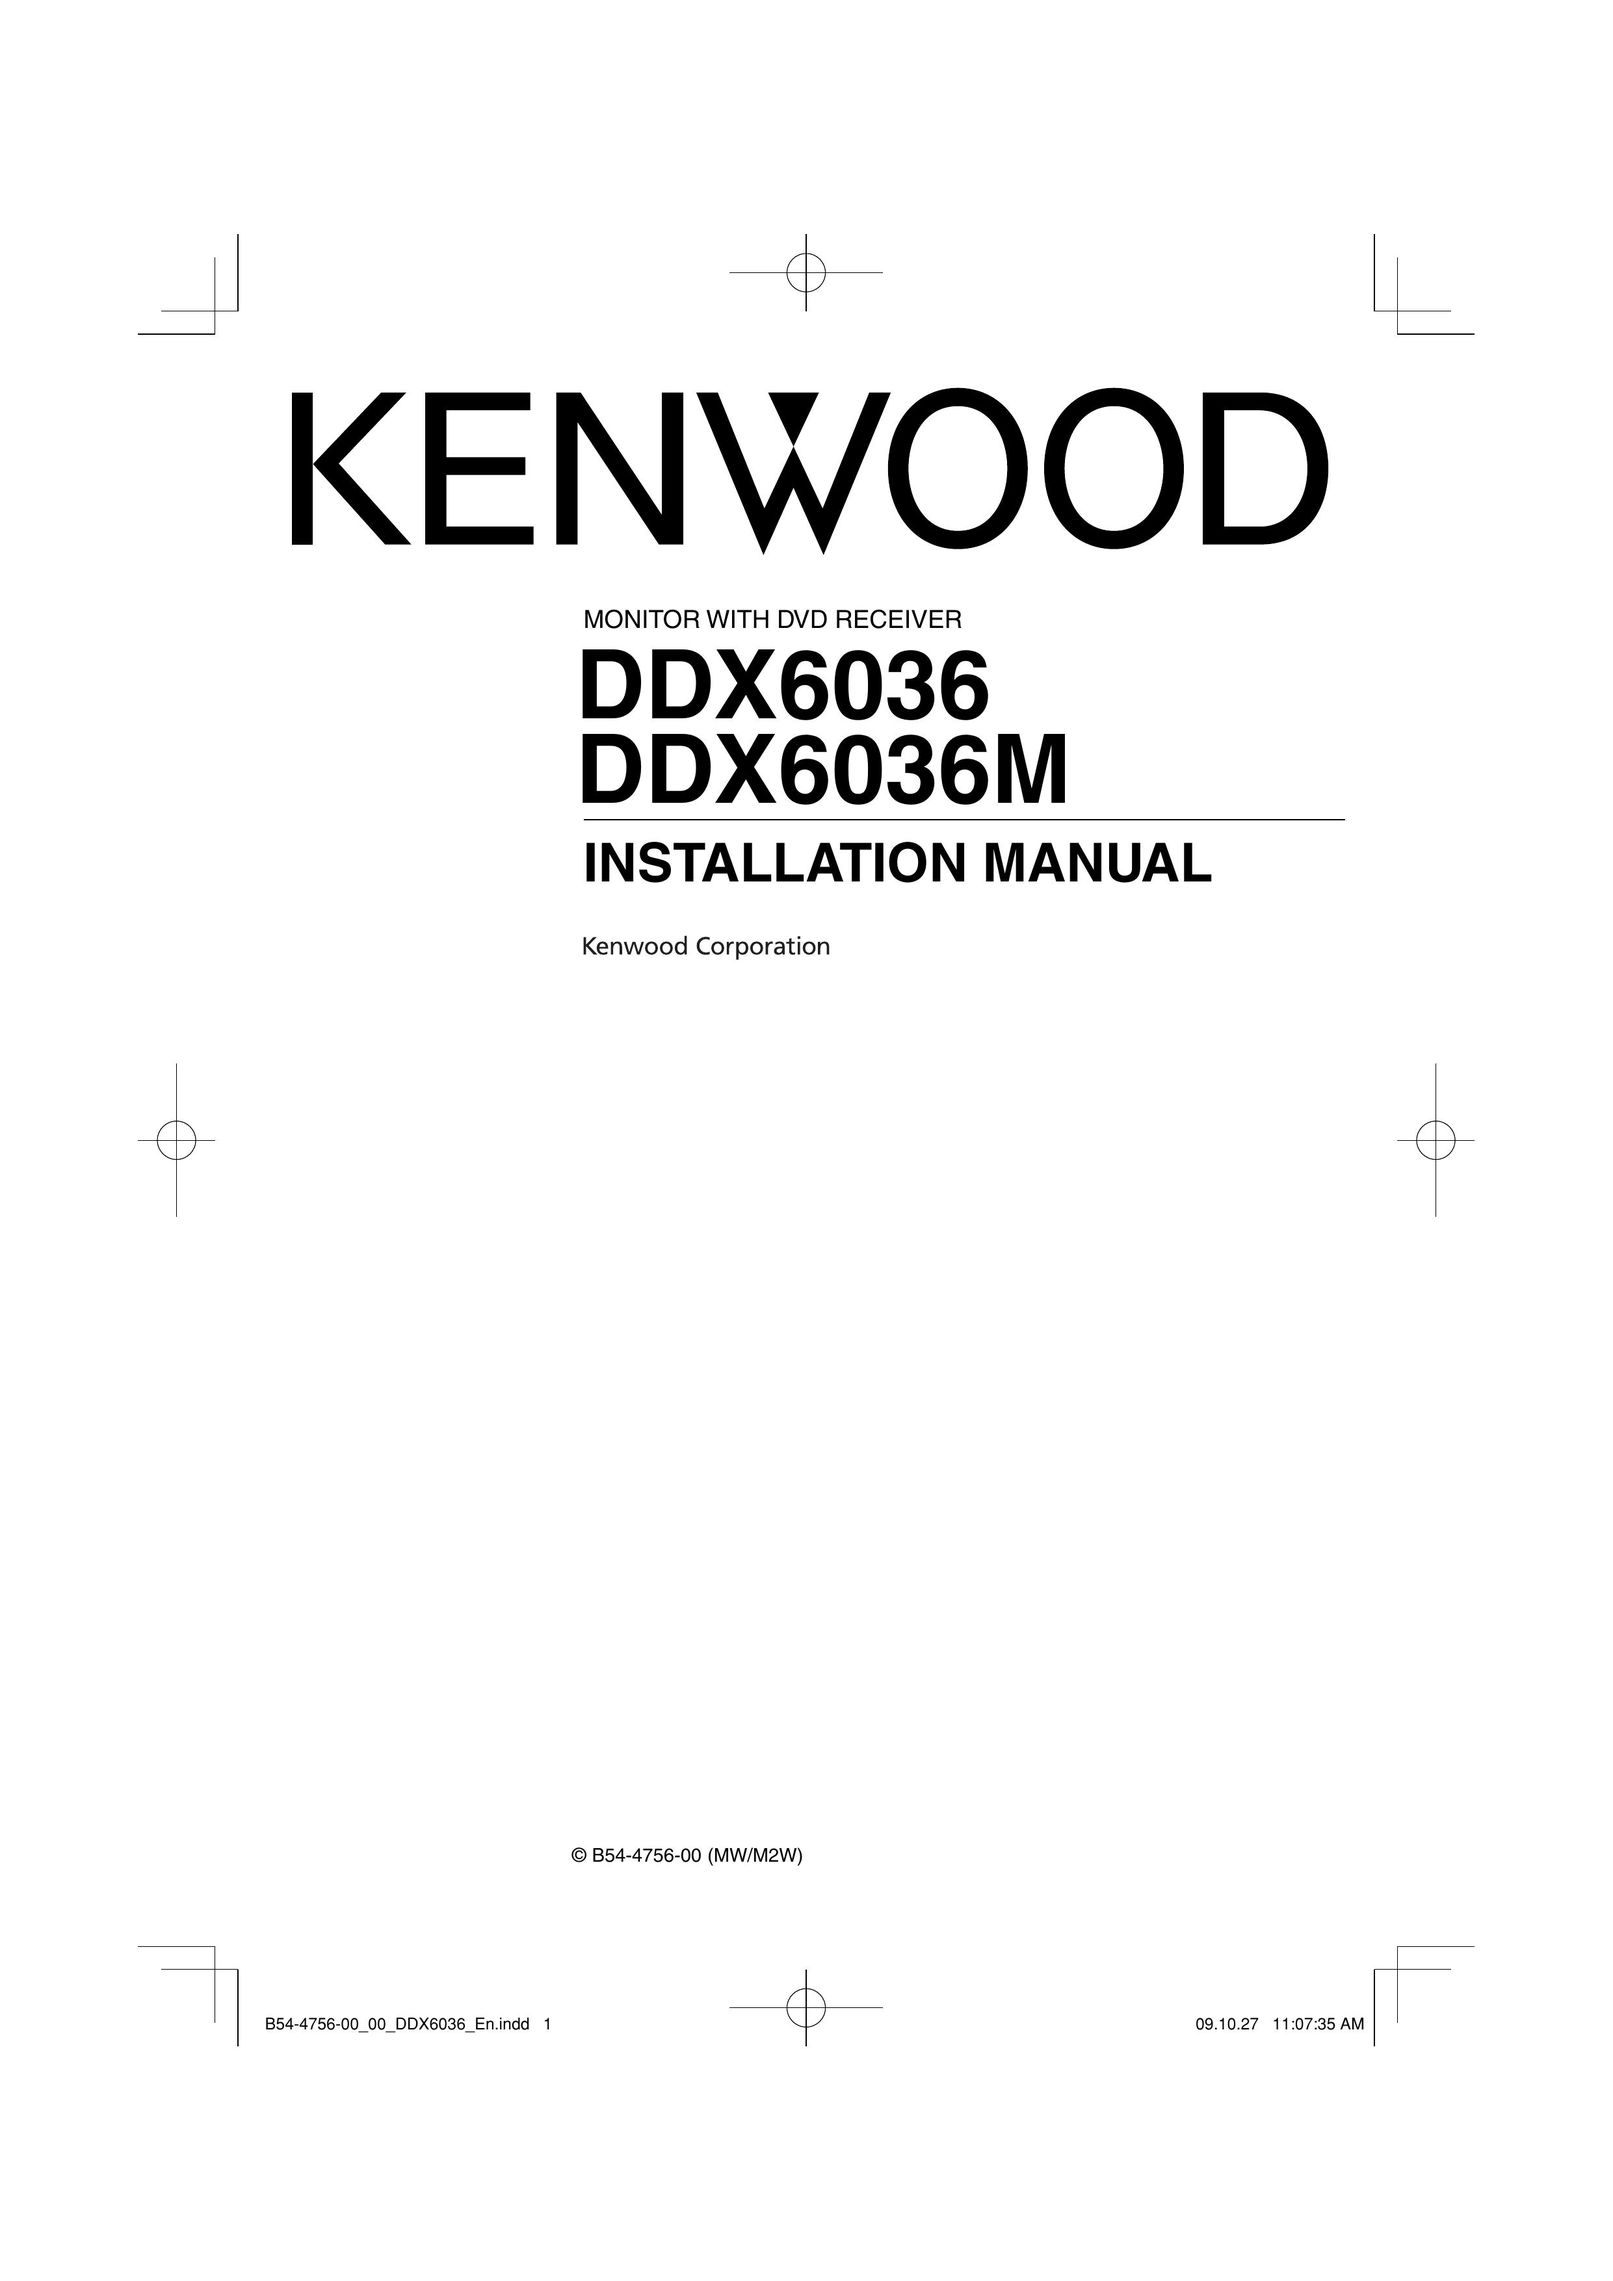 Kenwood DDX6036 Car Video System User Manual